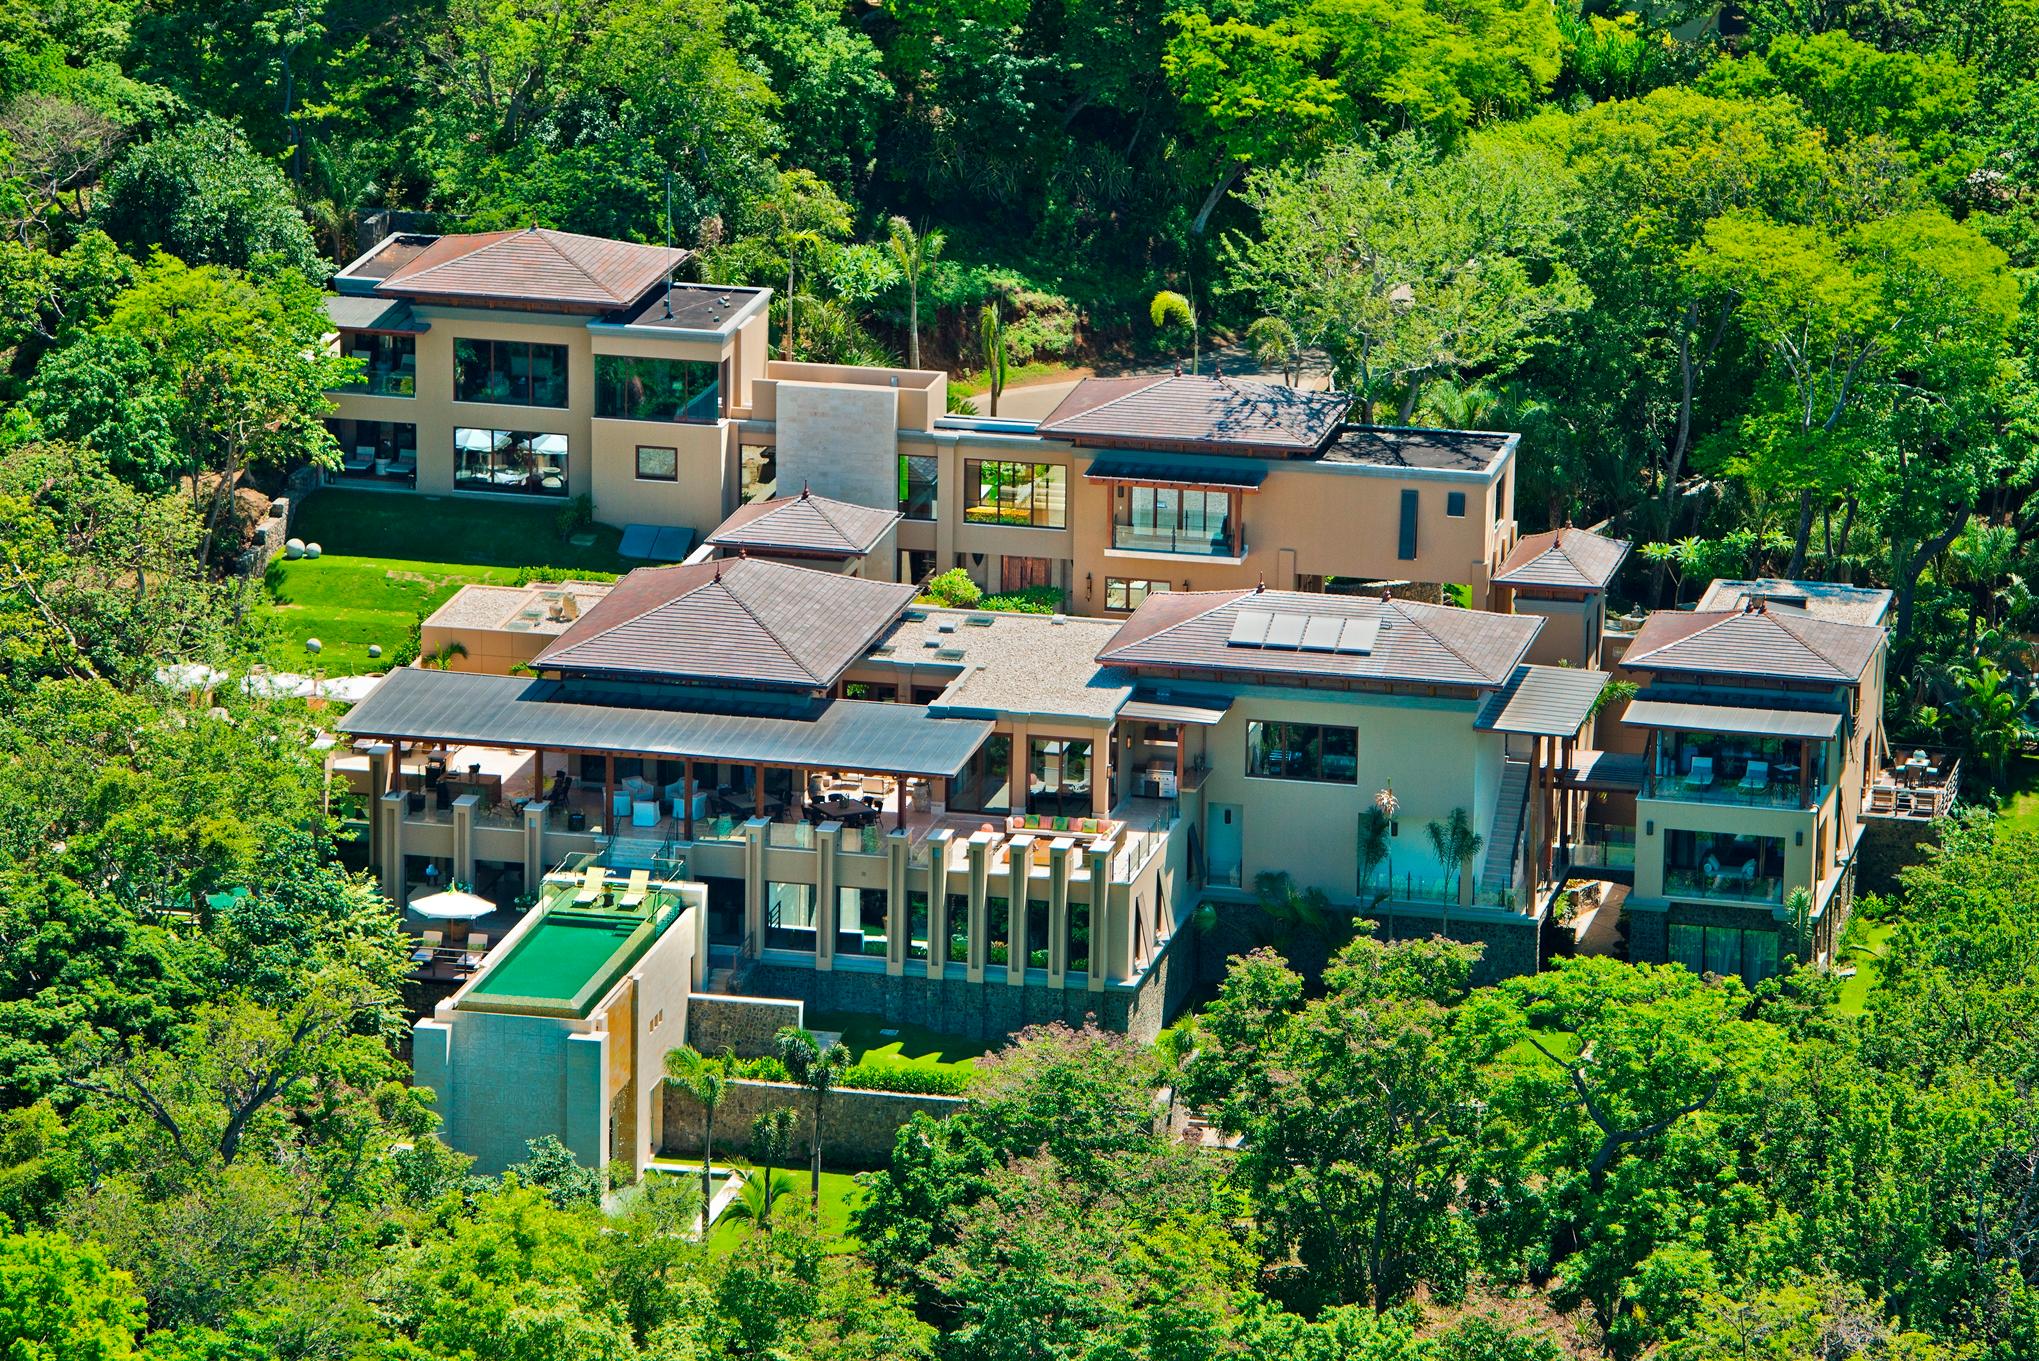 Villa Manzu, Papagayo, Costa Rica - $140,000